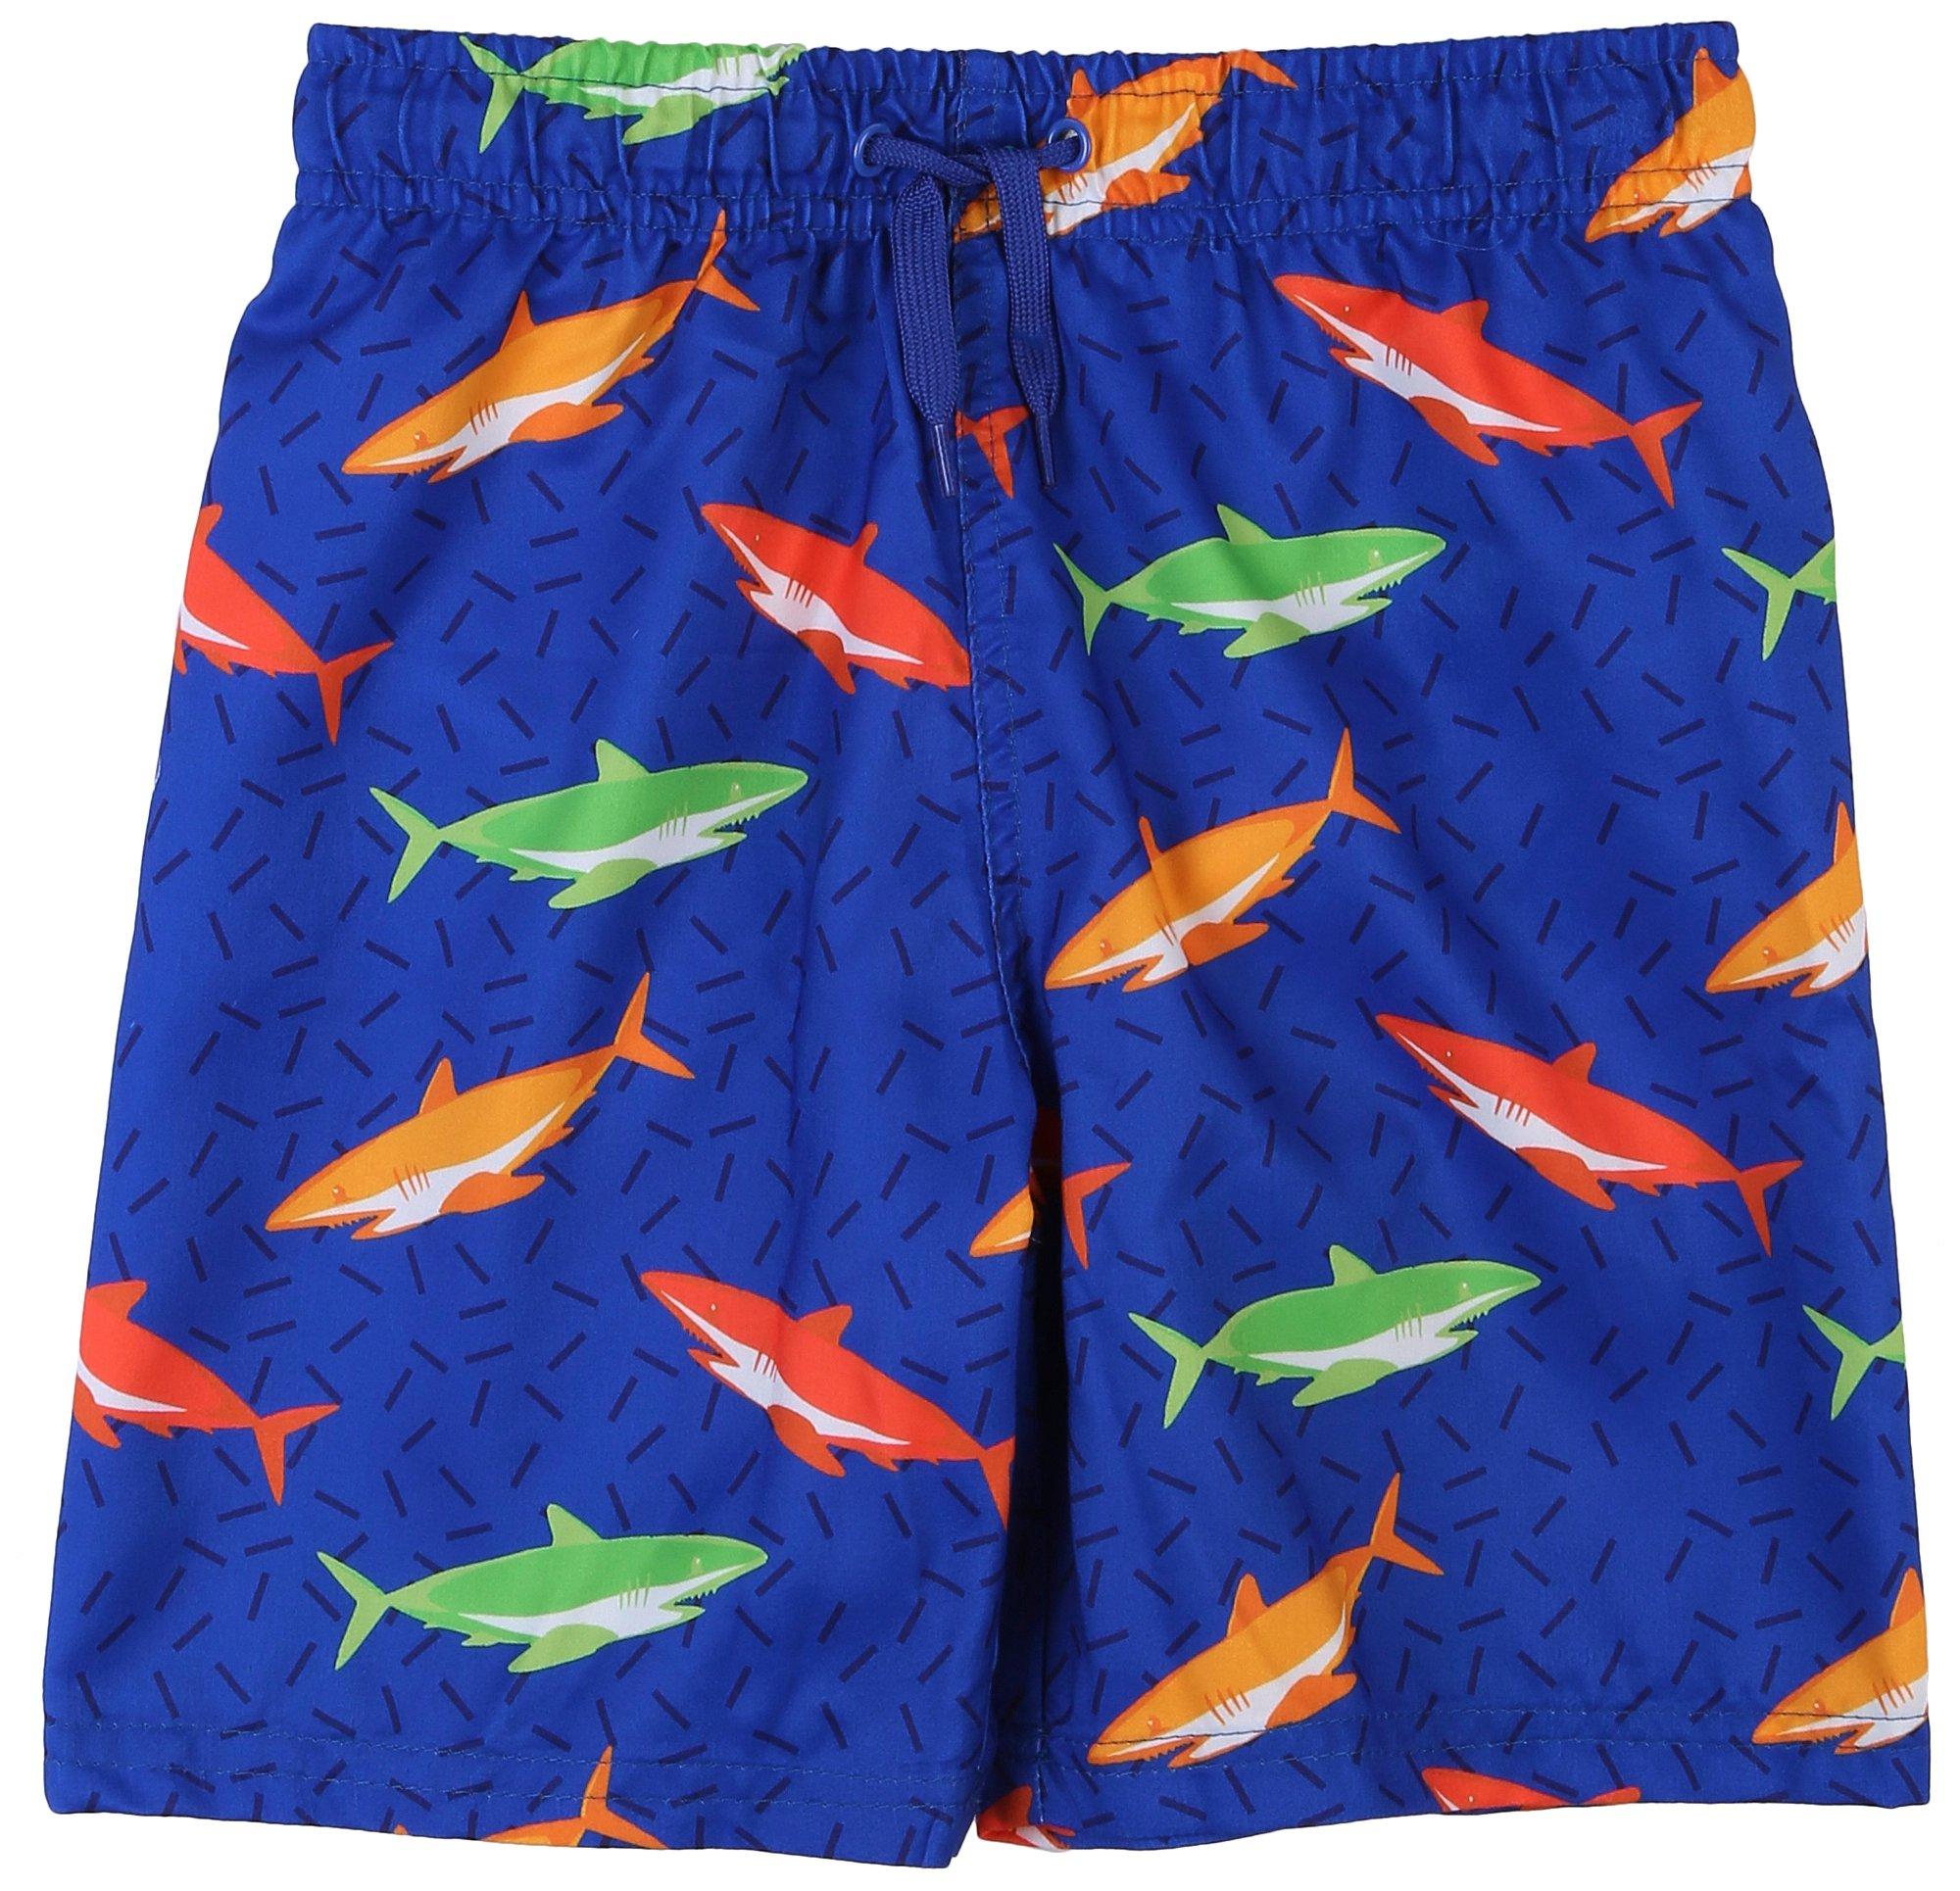 DOT & ZAZZ  Little & Big Boys Shark Print Swimsuit Shorts